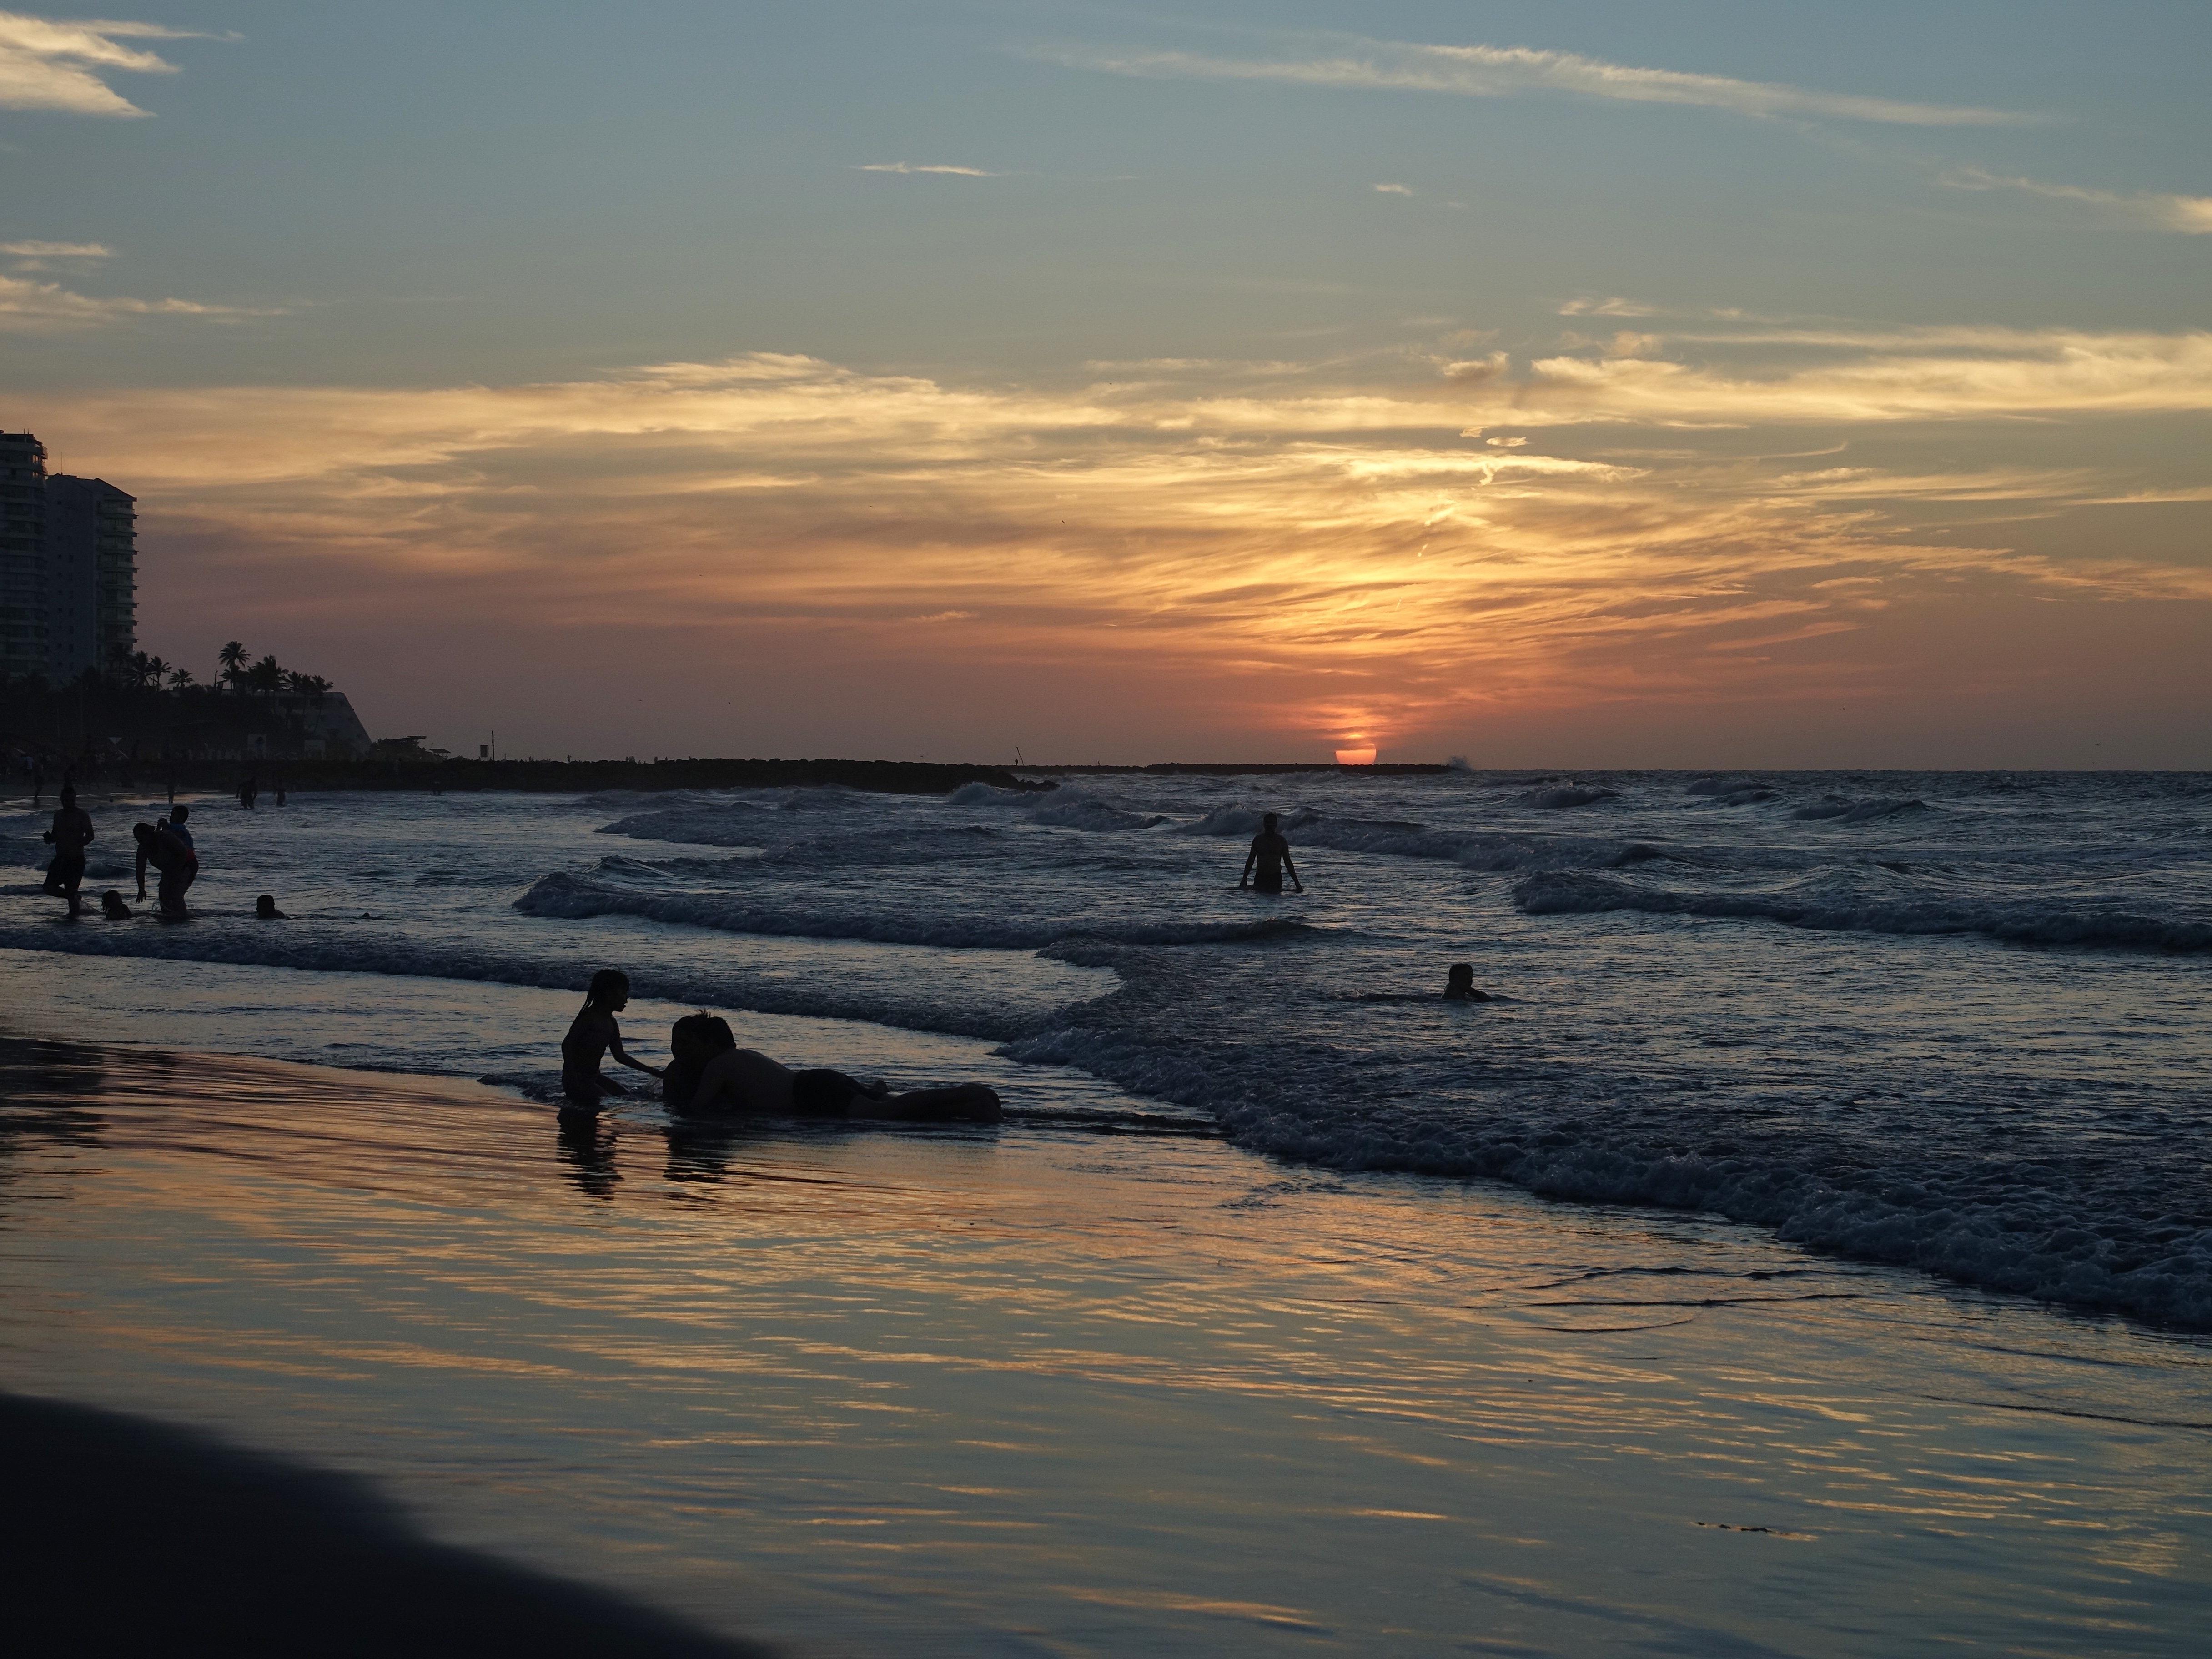 Sunset at Bocagrande beach